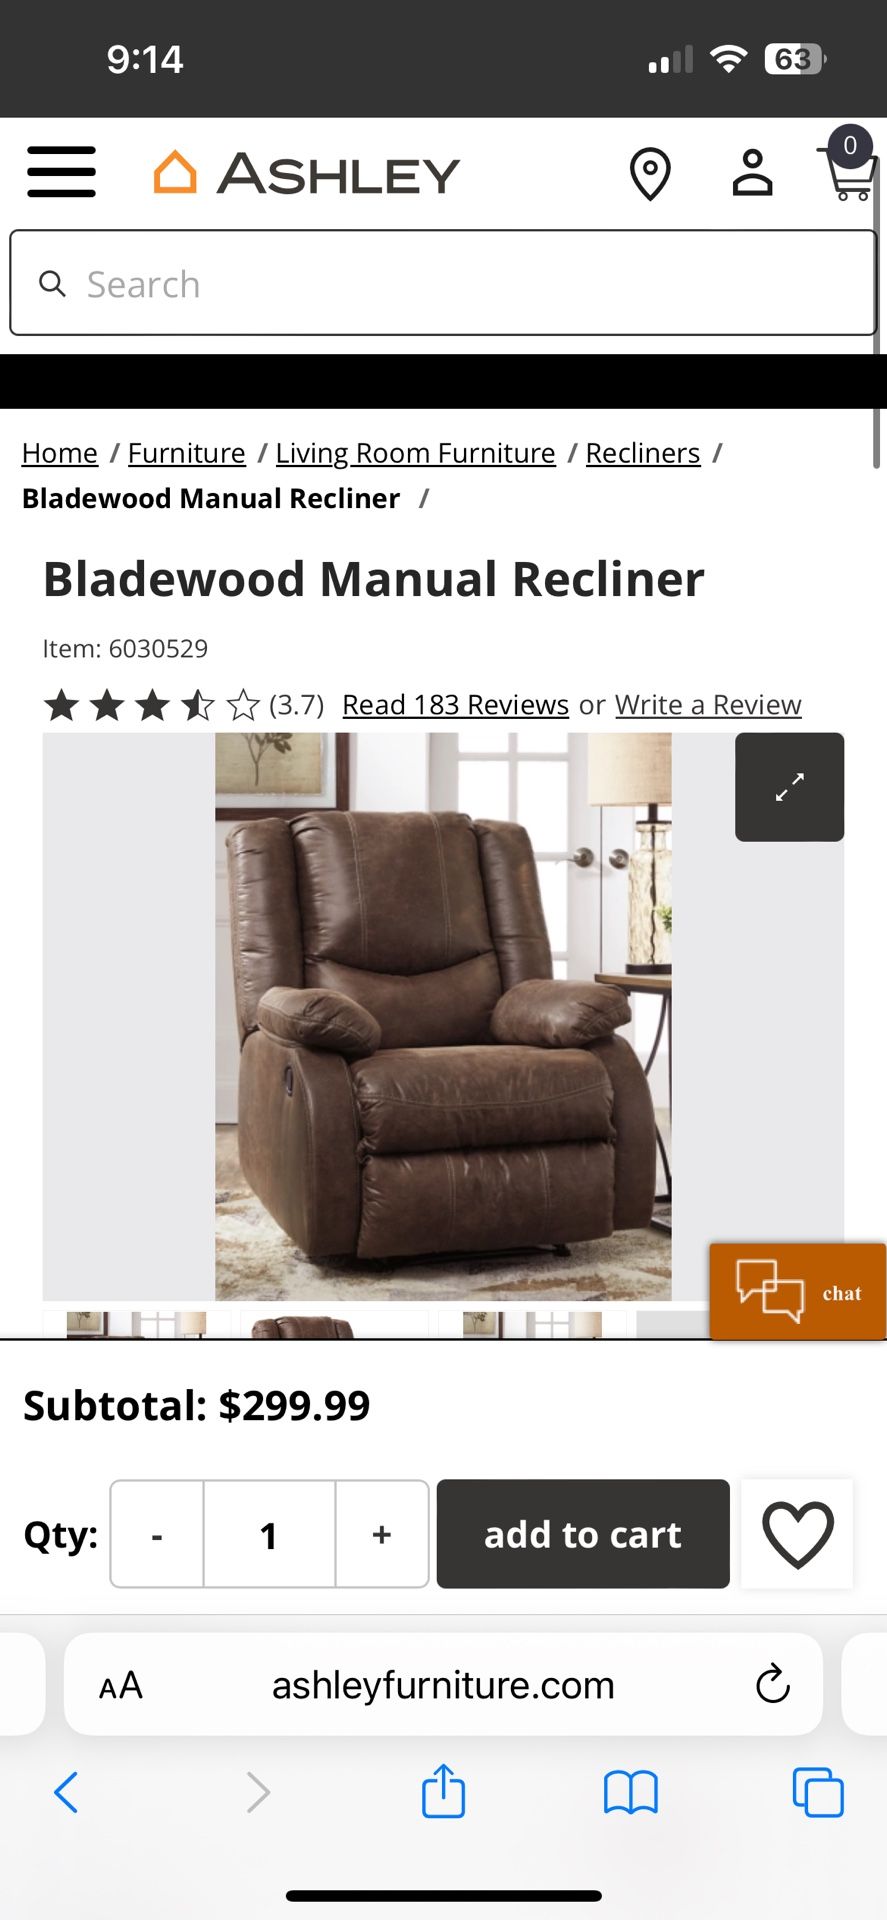 Bladewood Manual Recliner